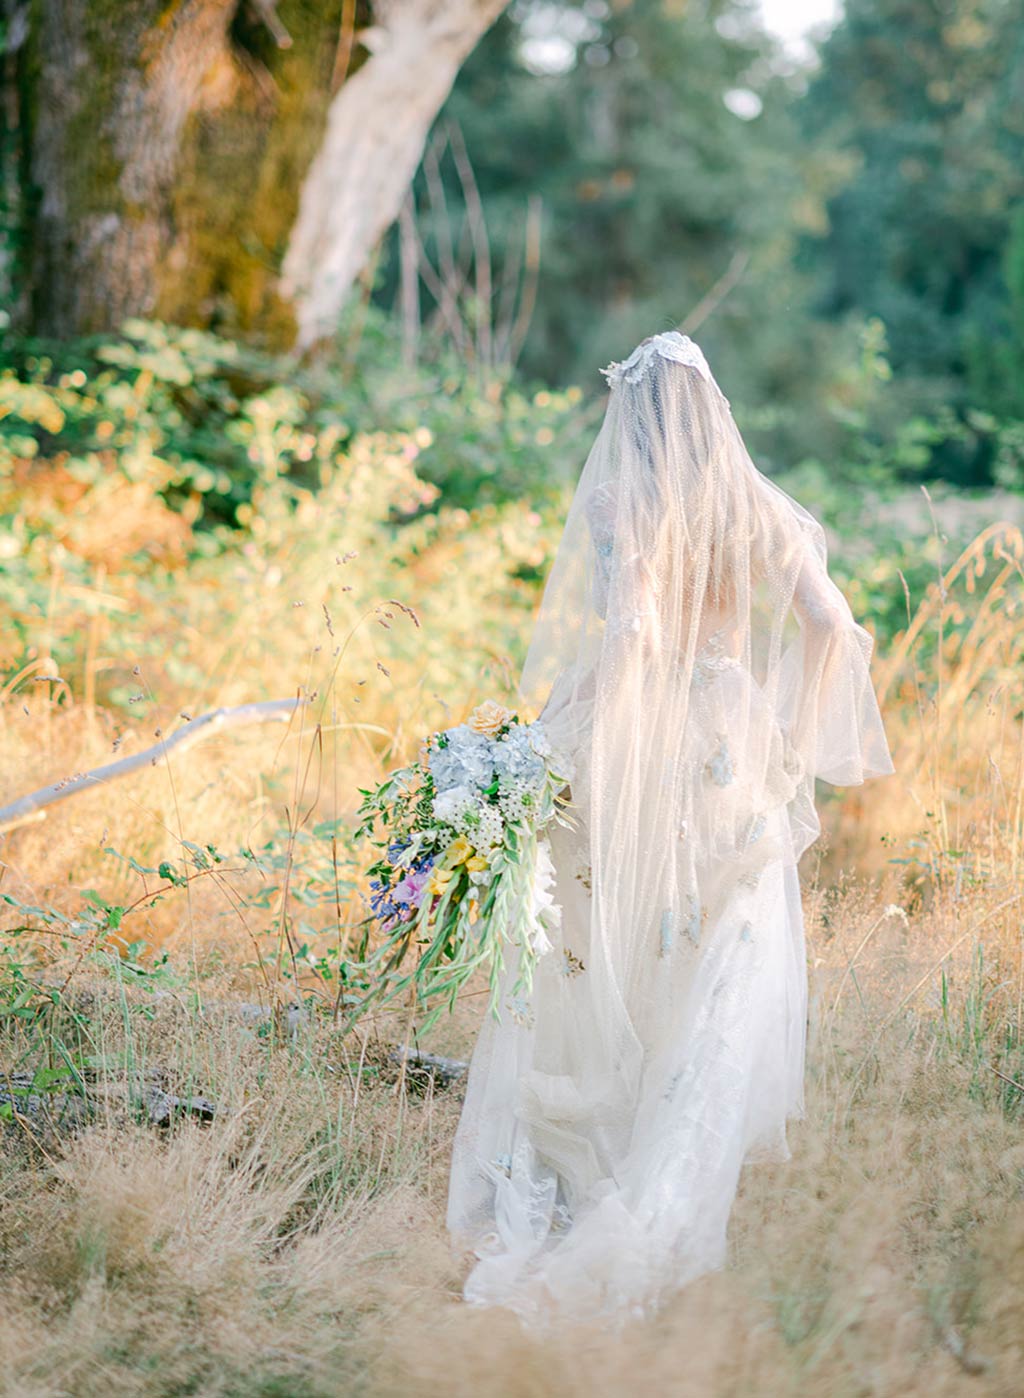 Bride in Wedding Dress and Veil in Garden Wedding Setting